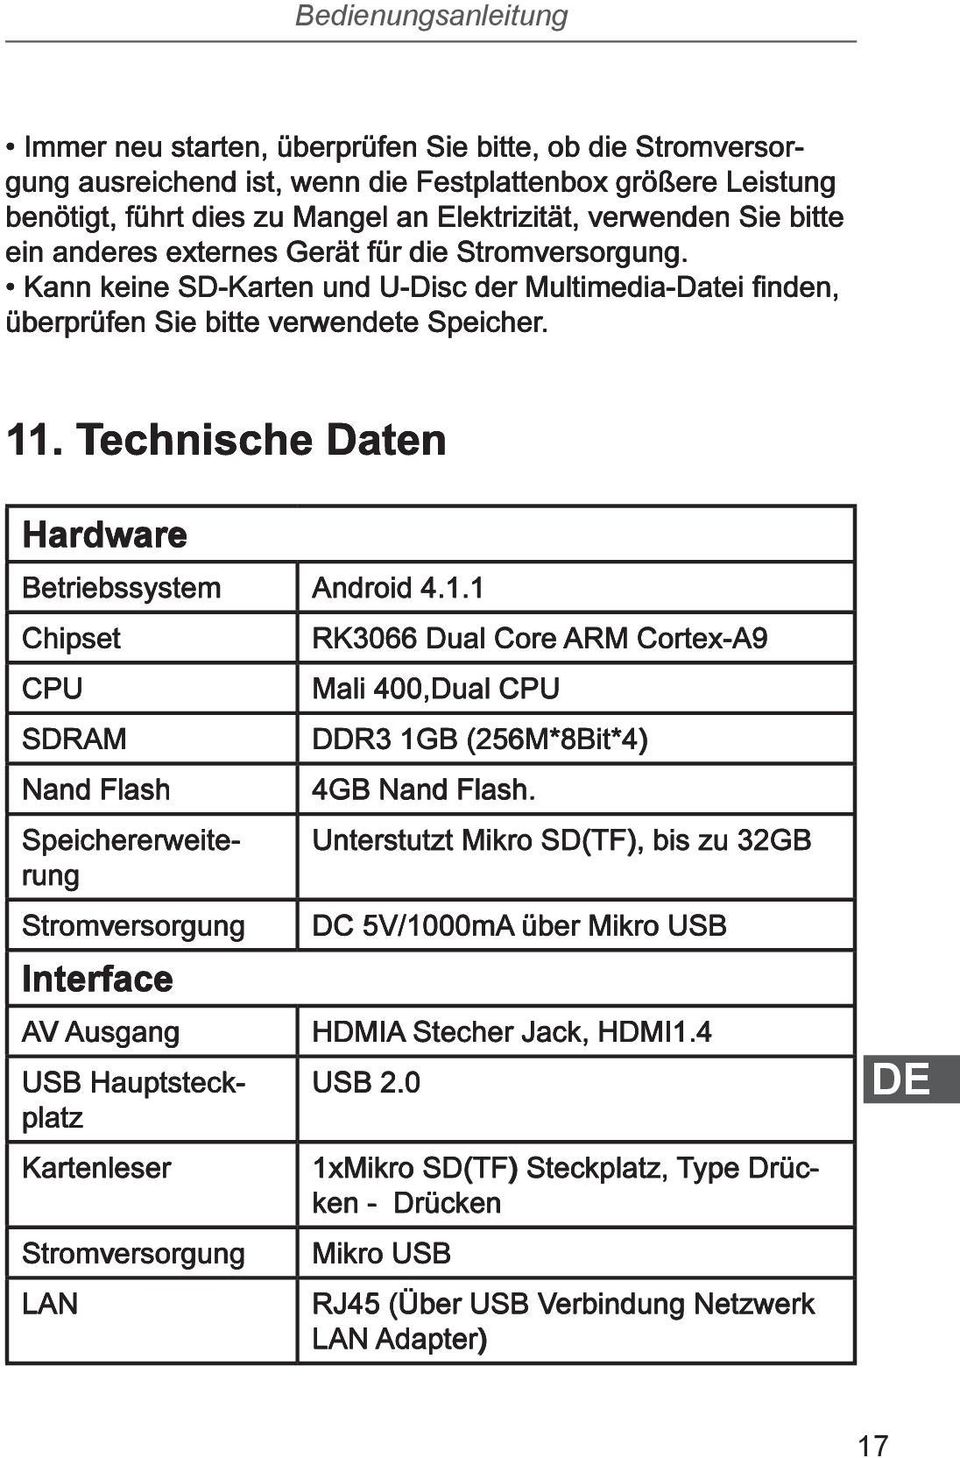 Technische Daten Hardware Betriebssystem Android 4.1.1 Chipset RK3066 Dual Core ARM Cortex-A9 CPU Mali 400,Dual CPU SDRAM DDR3 1GB (256M*8Bit*4) Nand Flash 4GB Nand Flash.